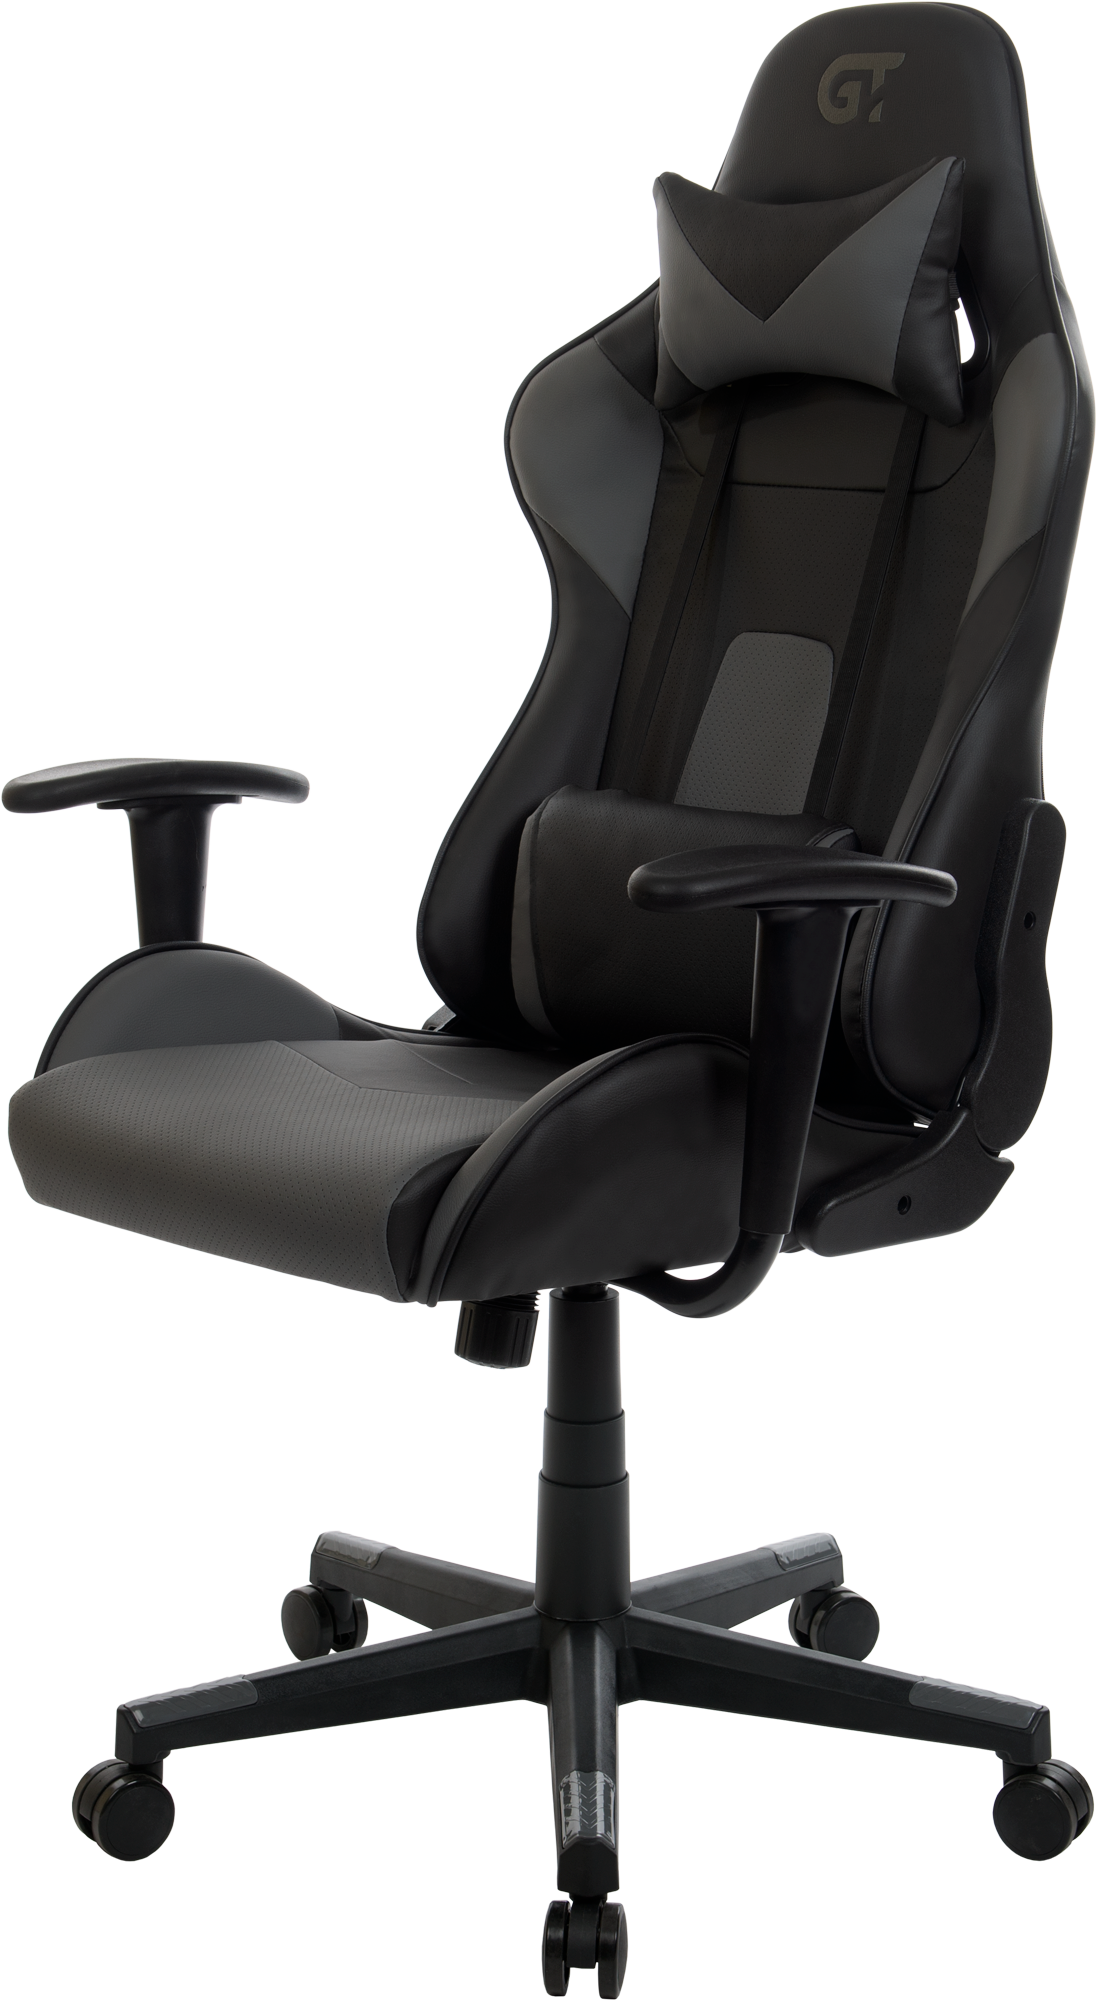 Геймерське крісло GT Racer чорне з темно-сірим (X-2317 Black/Dark Gray) - фото 7